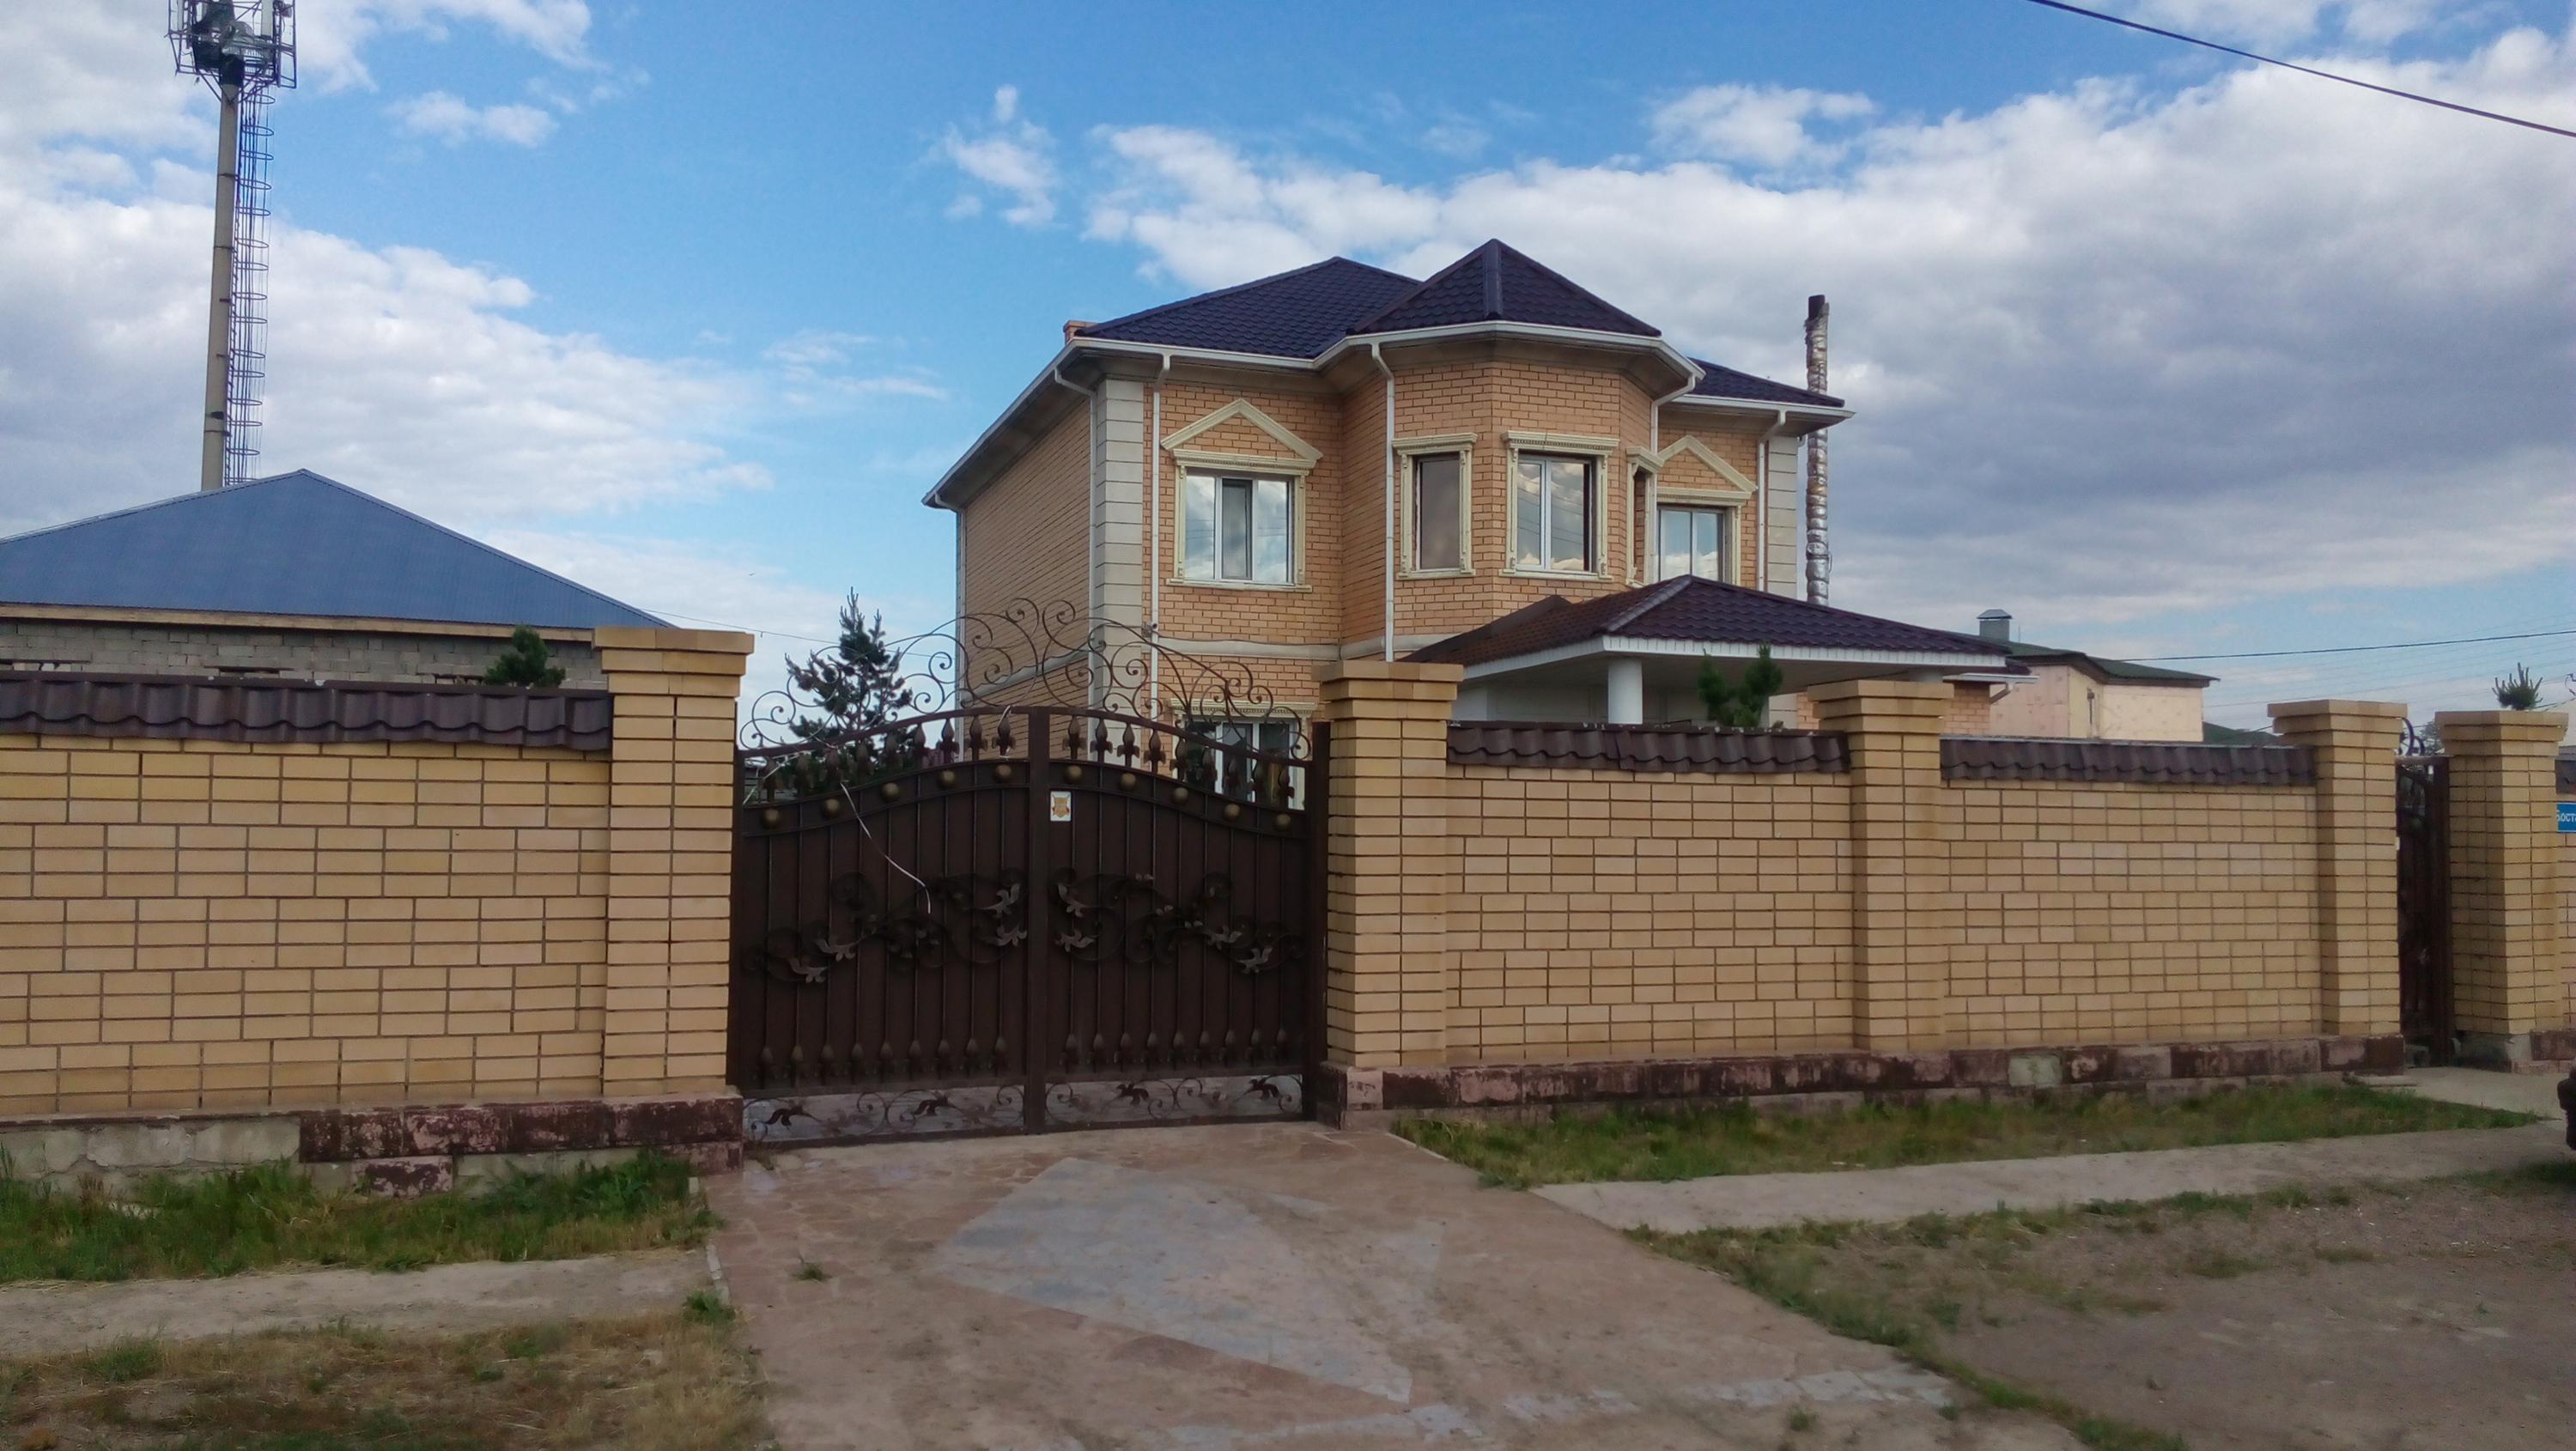 Частные дома в казахстане